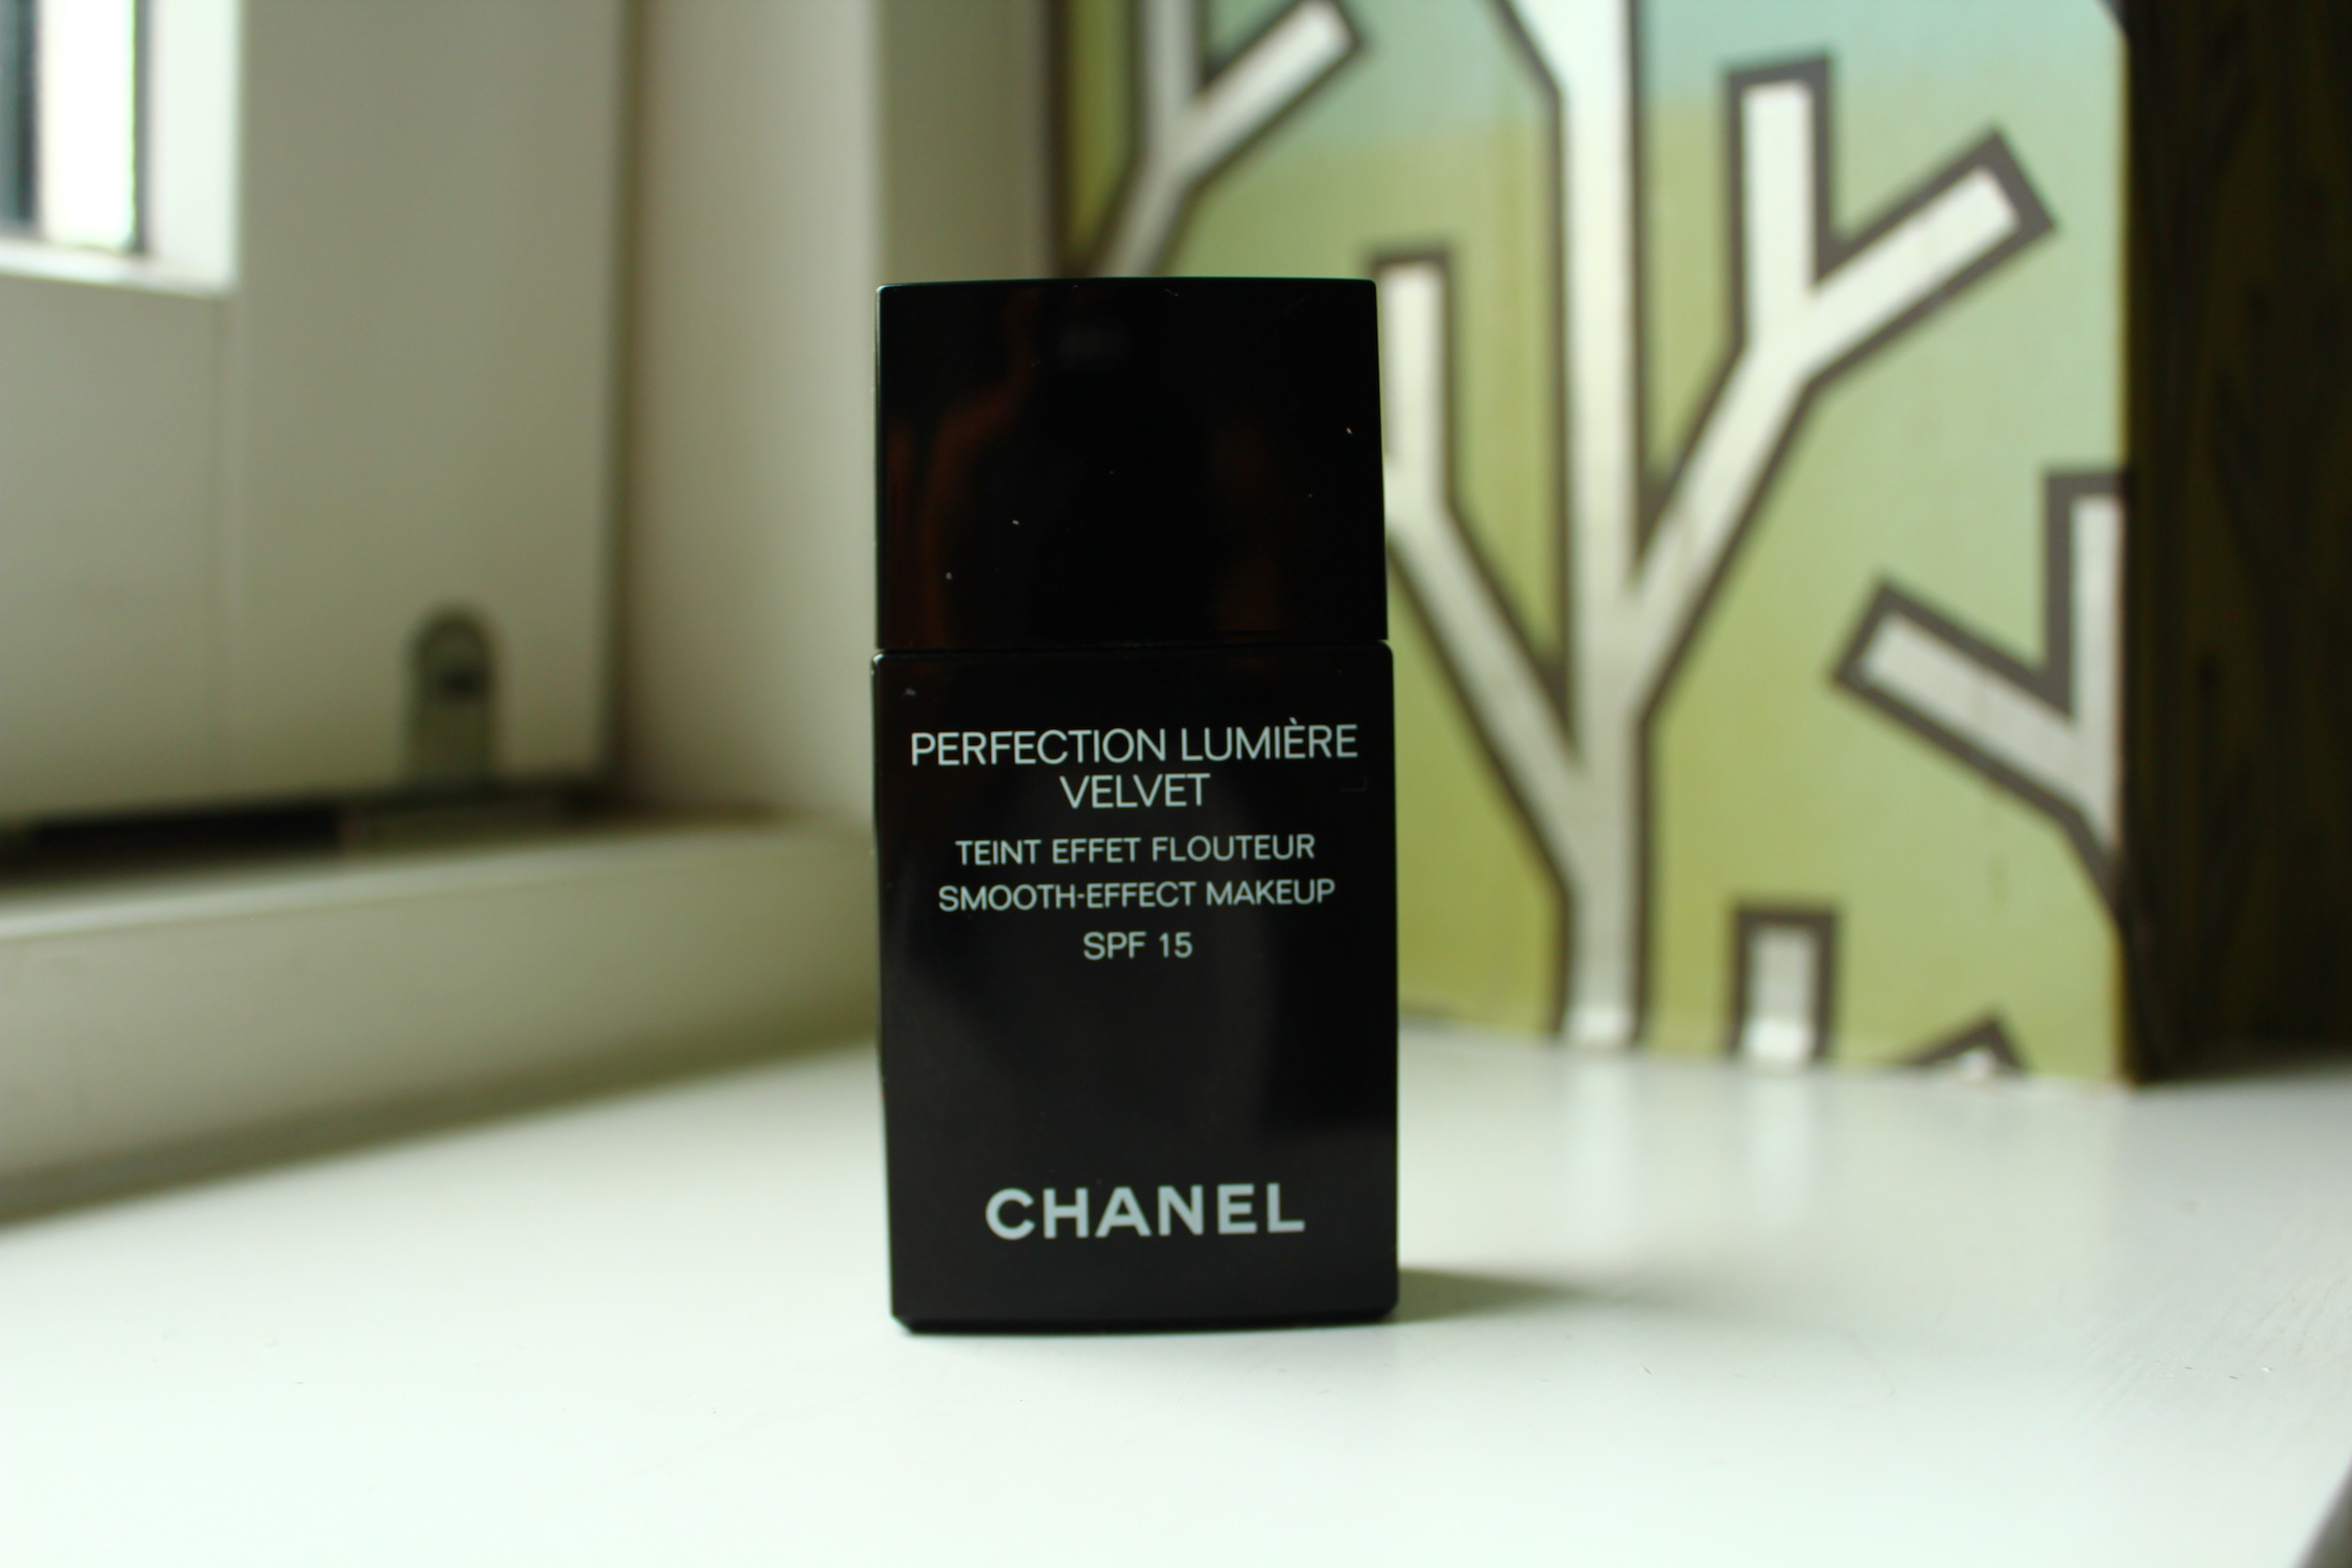 Chanel Pefection Lumiere Velvet Foundation Review